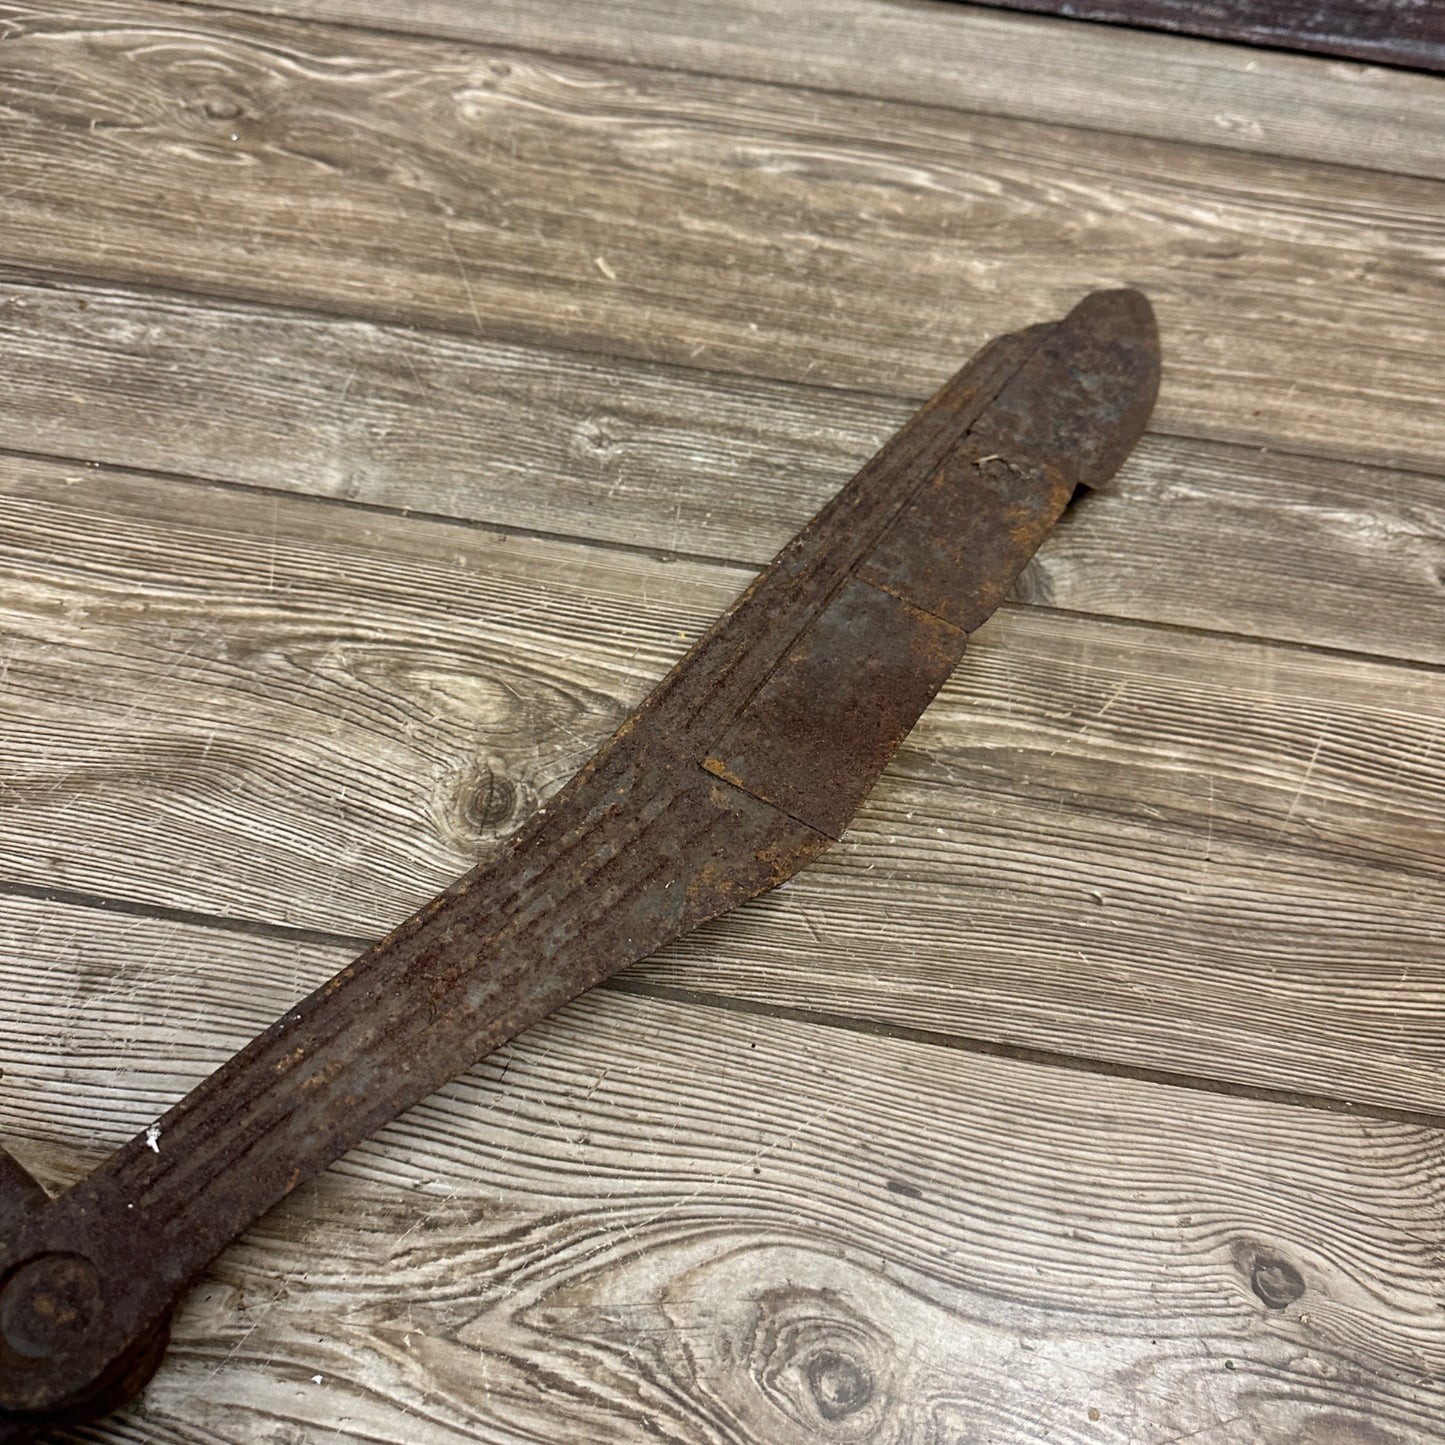 Antique Primitive Hay Knife 29" Farm Cutting Tool w/ Wood Handles Rustic Old Decor